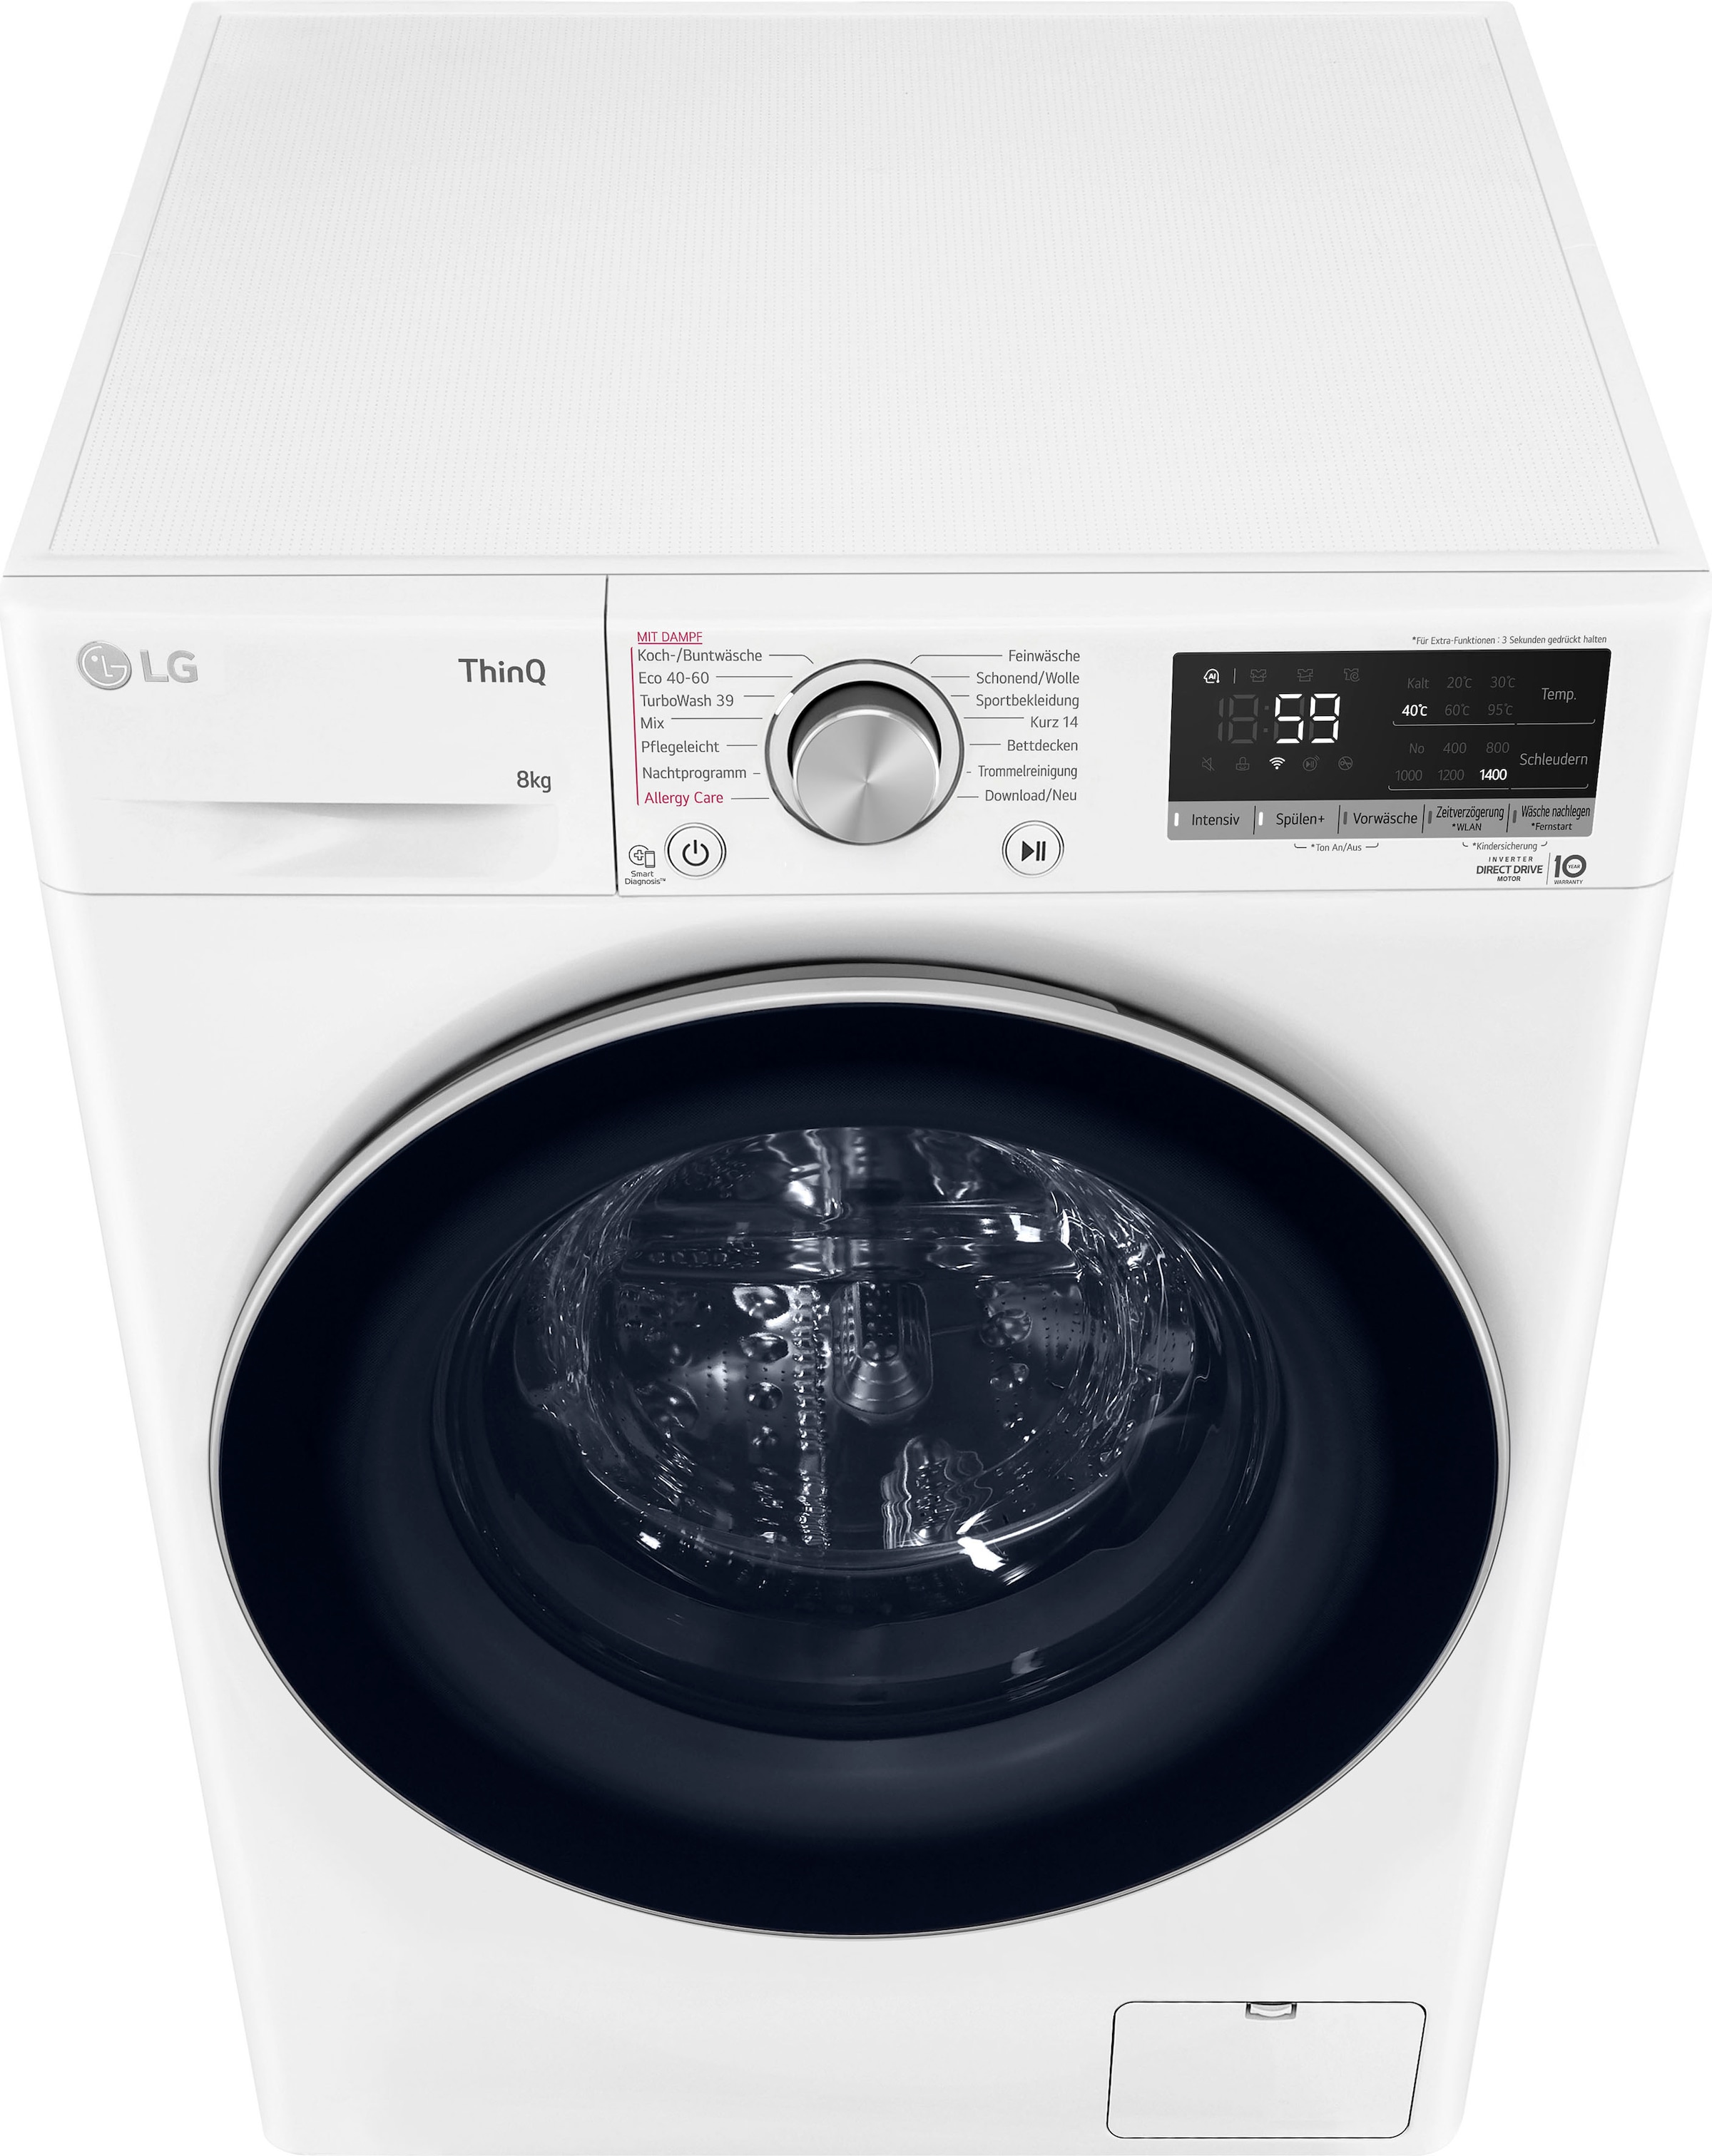 | BAUR 8 »F4WV7081«, LG per 1400 F4WV7081, Raten Waschmaschine kg, U/min